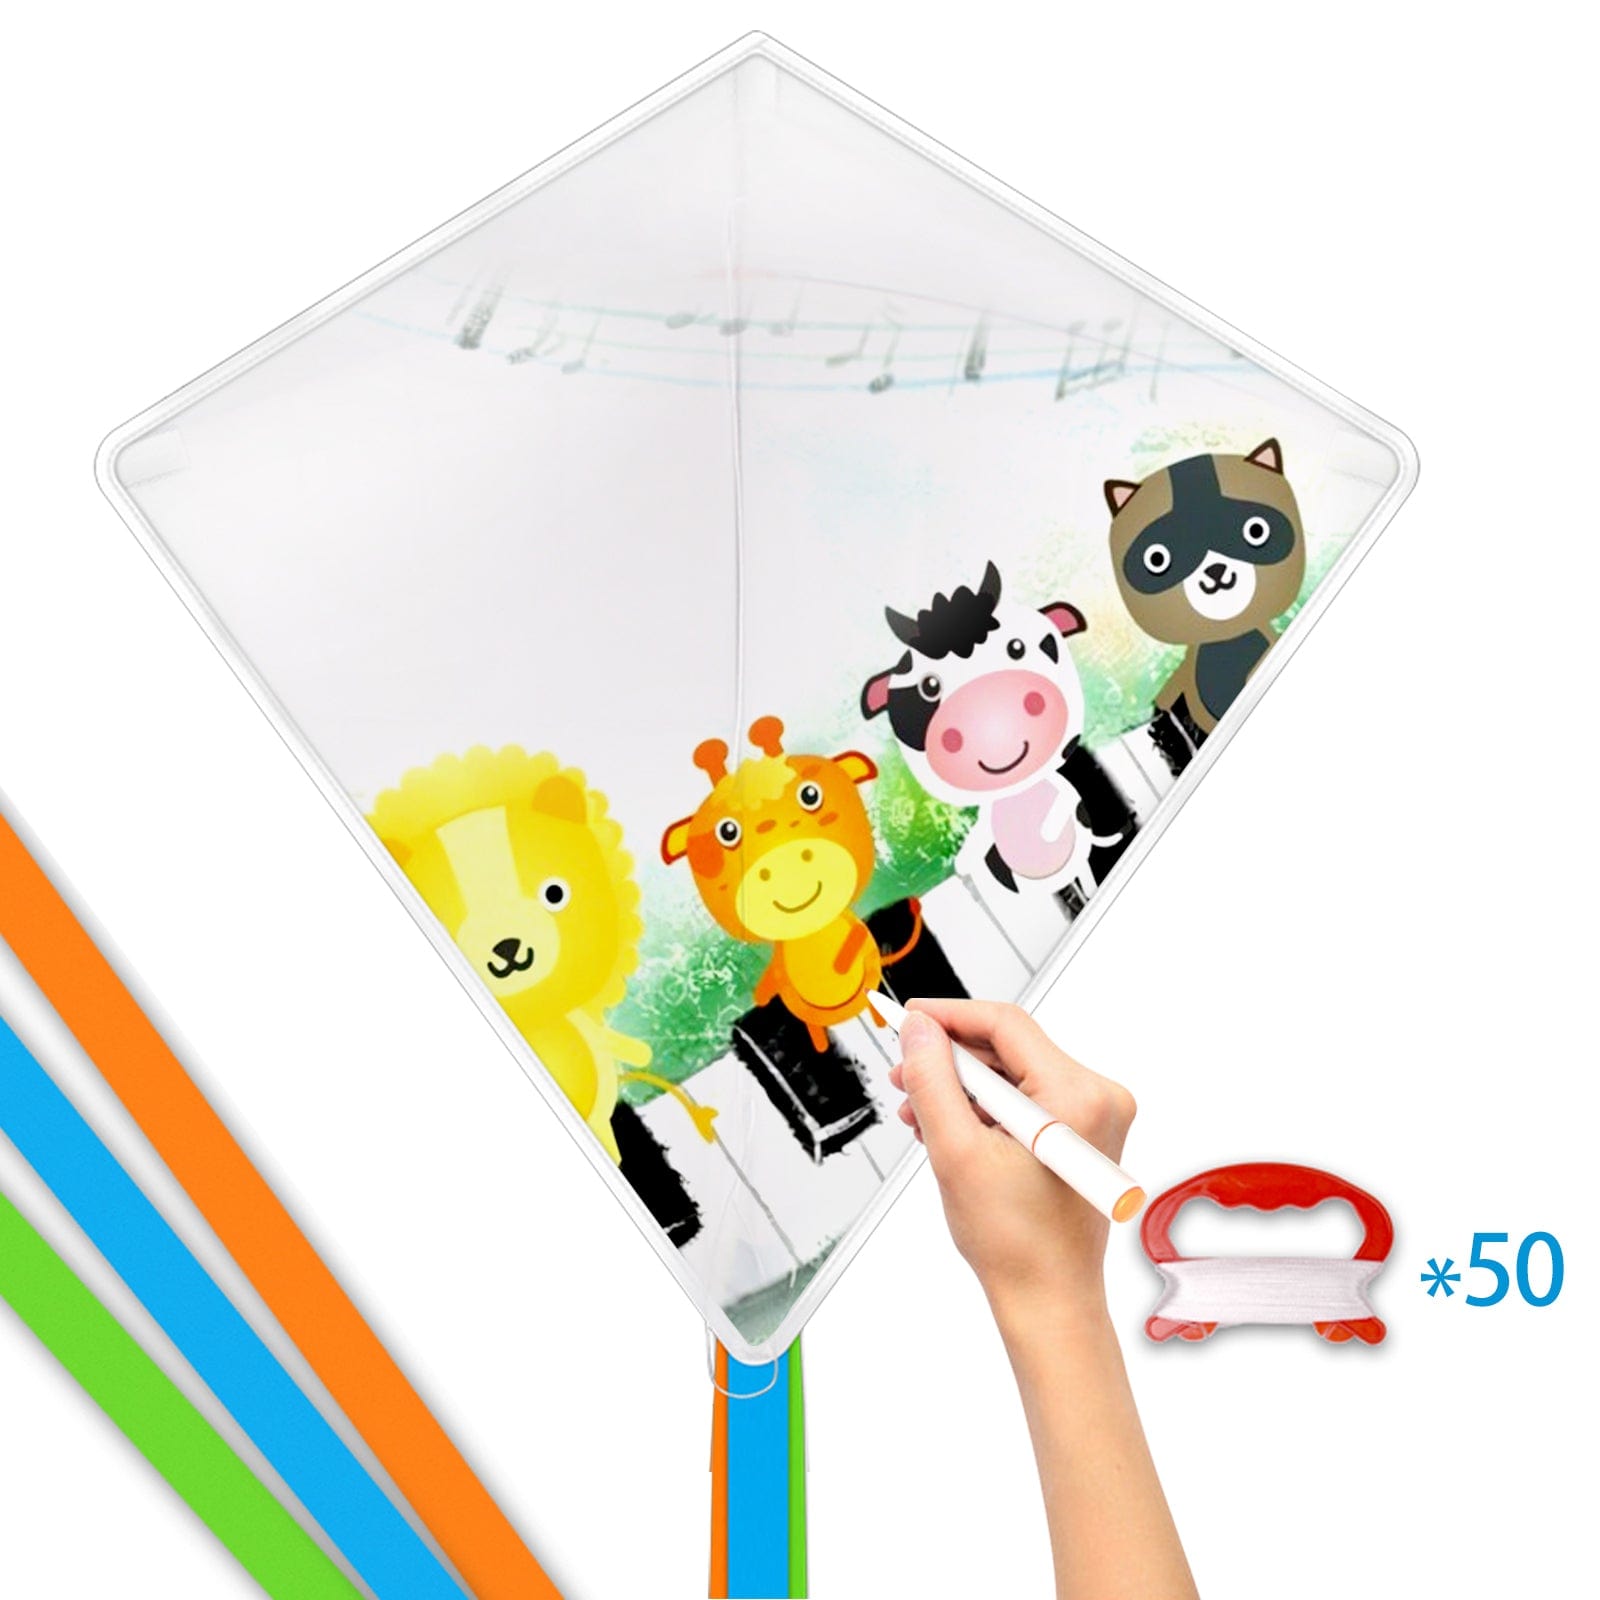 Mint's Colorful Life Kite Kits (50 Pack)